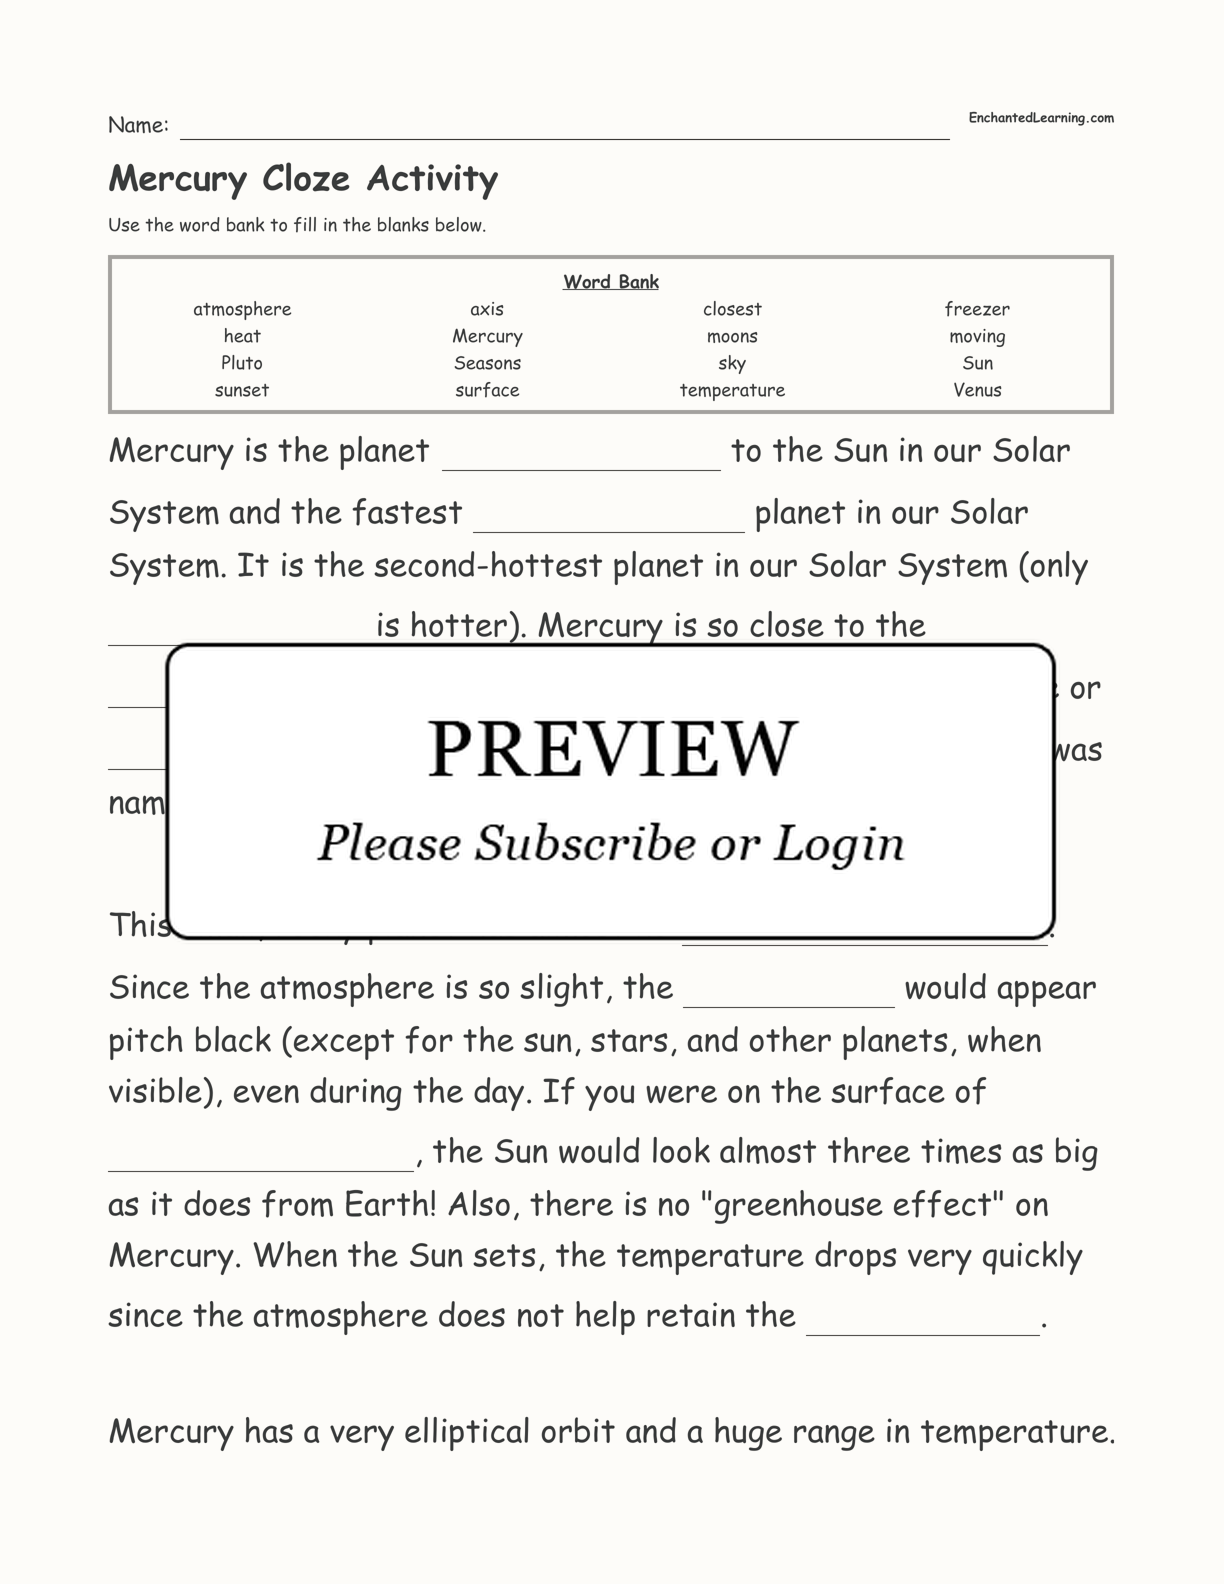 Mercury Cloze Activity interactive worksheet page 1